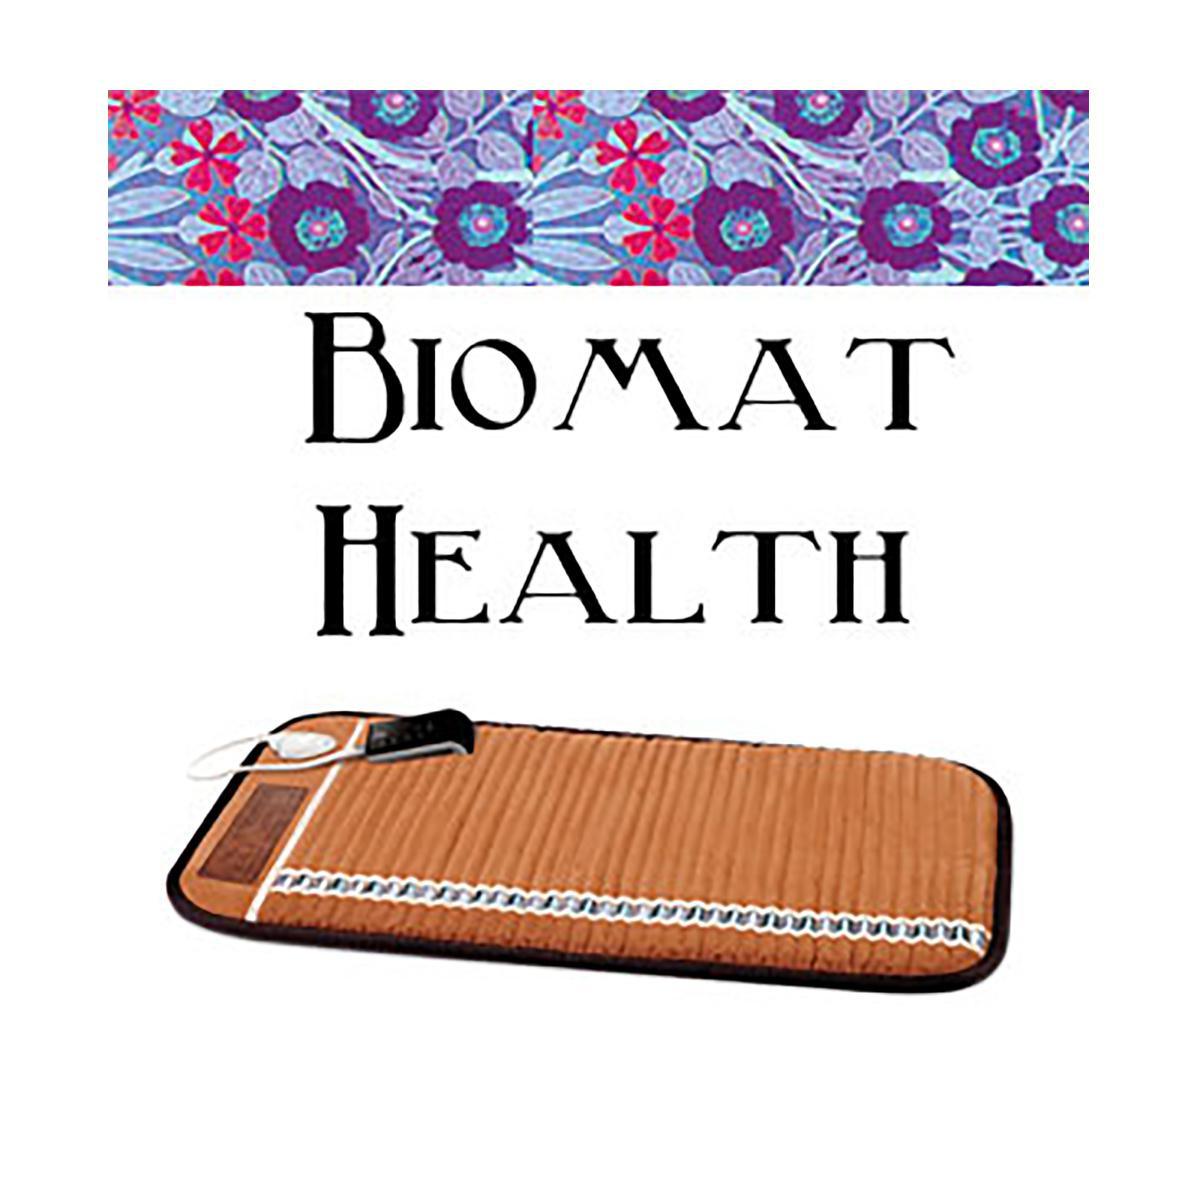 Biomat Health